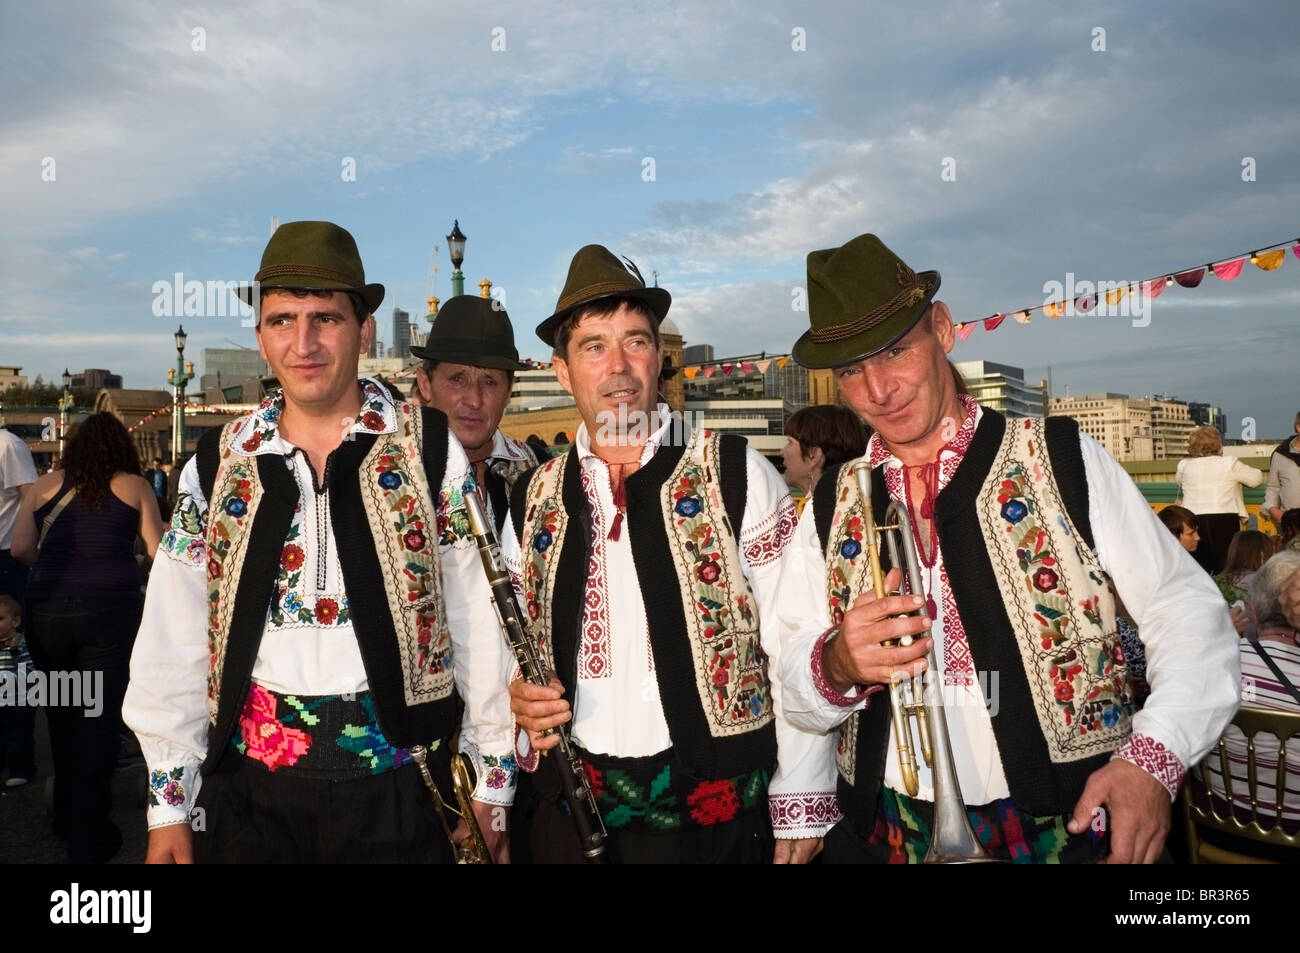 Rumänische Männer in kulturellen ethnographische Outfits, band Spieler bei Bürgermeister Thames Festival, Southwark Bridge, London, England, UK Stockfoto